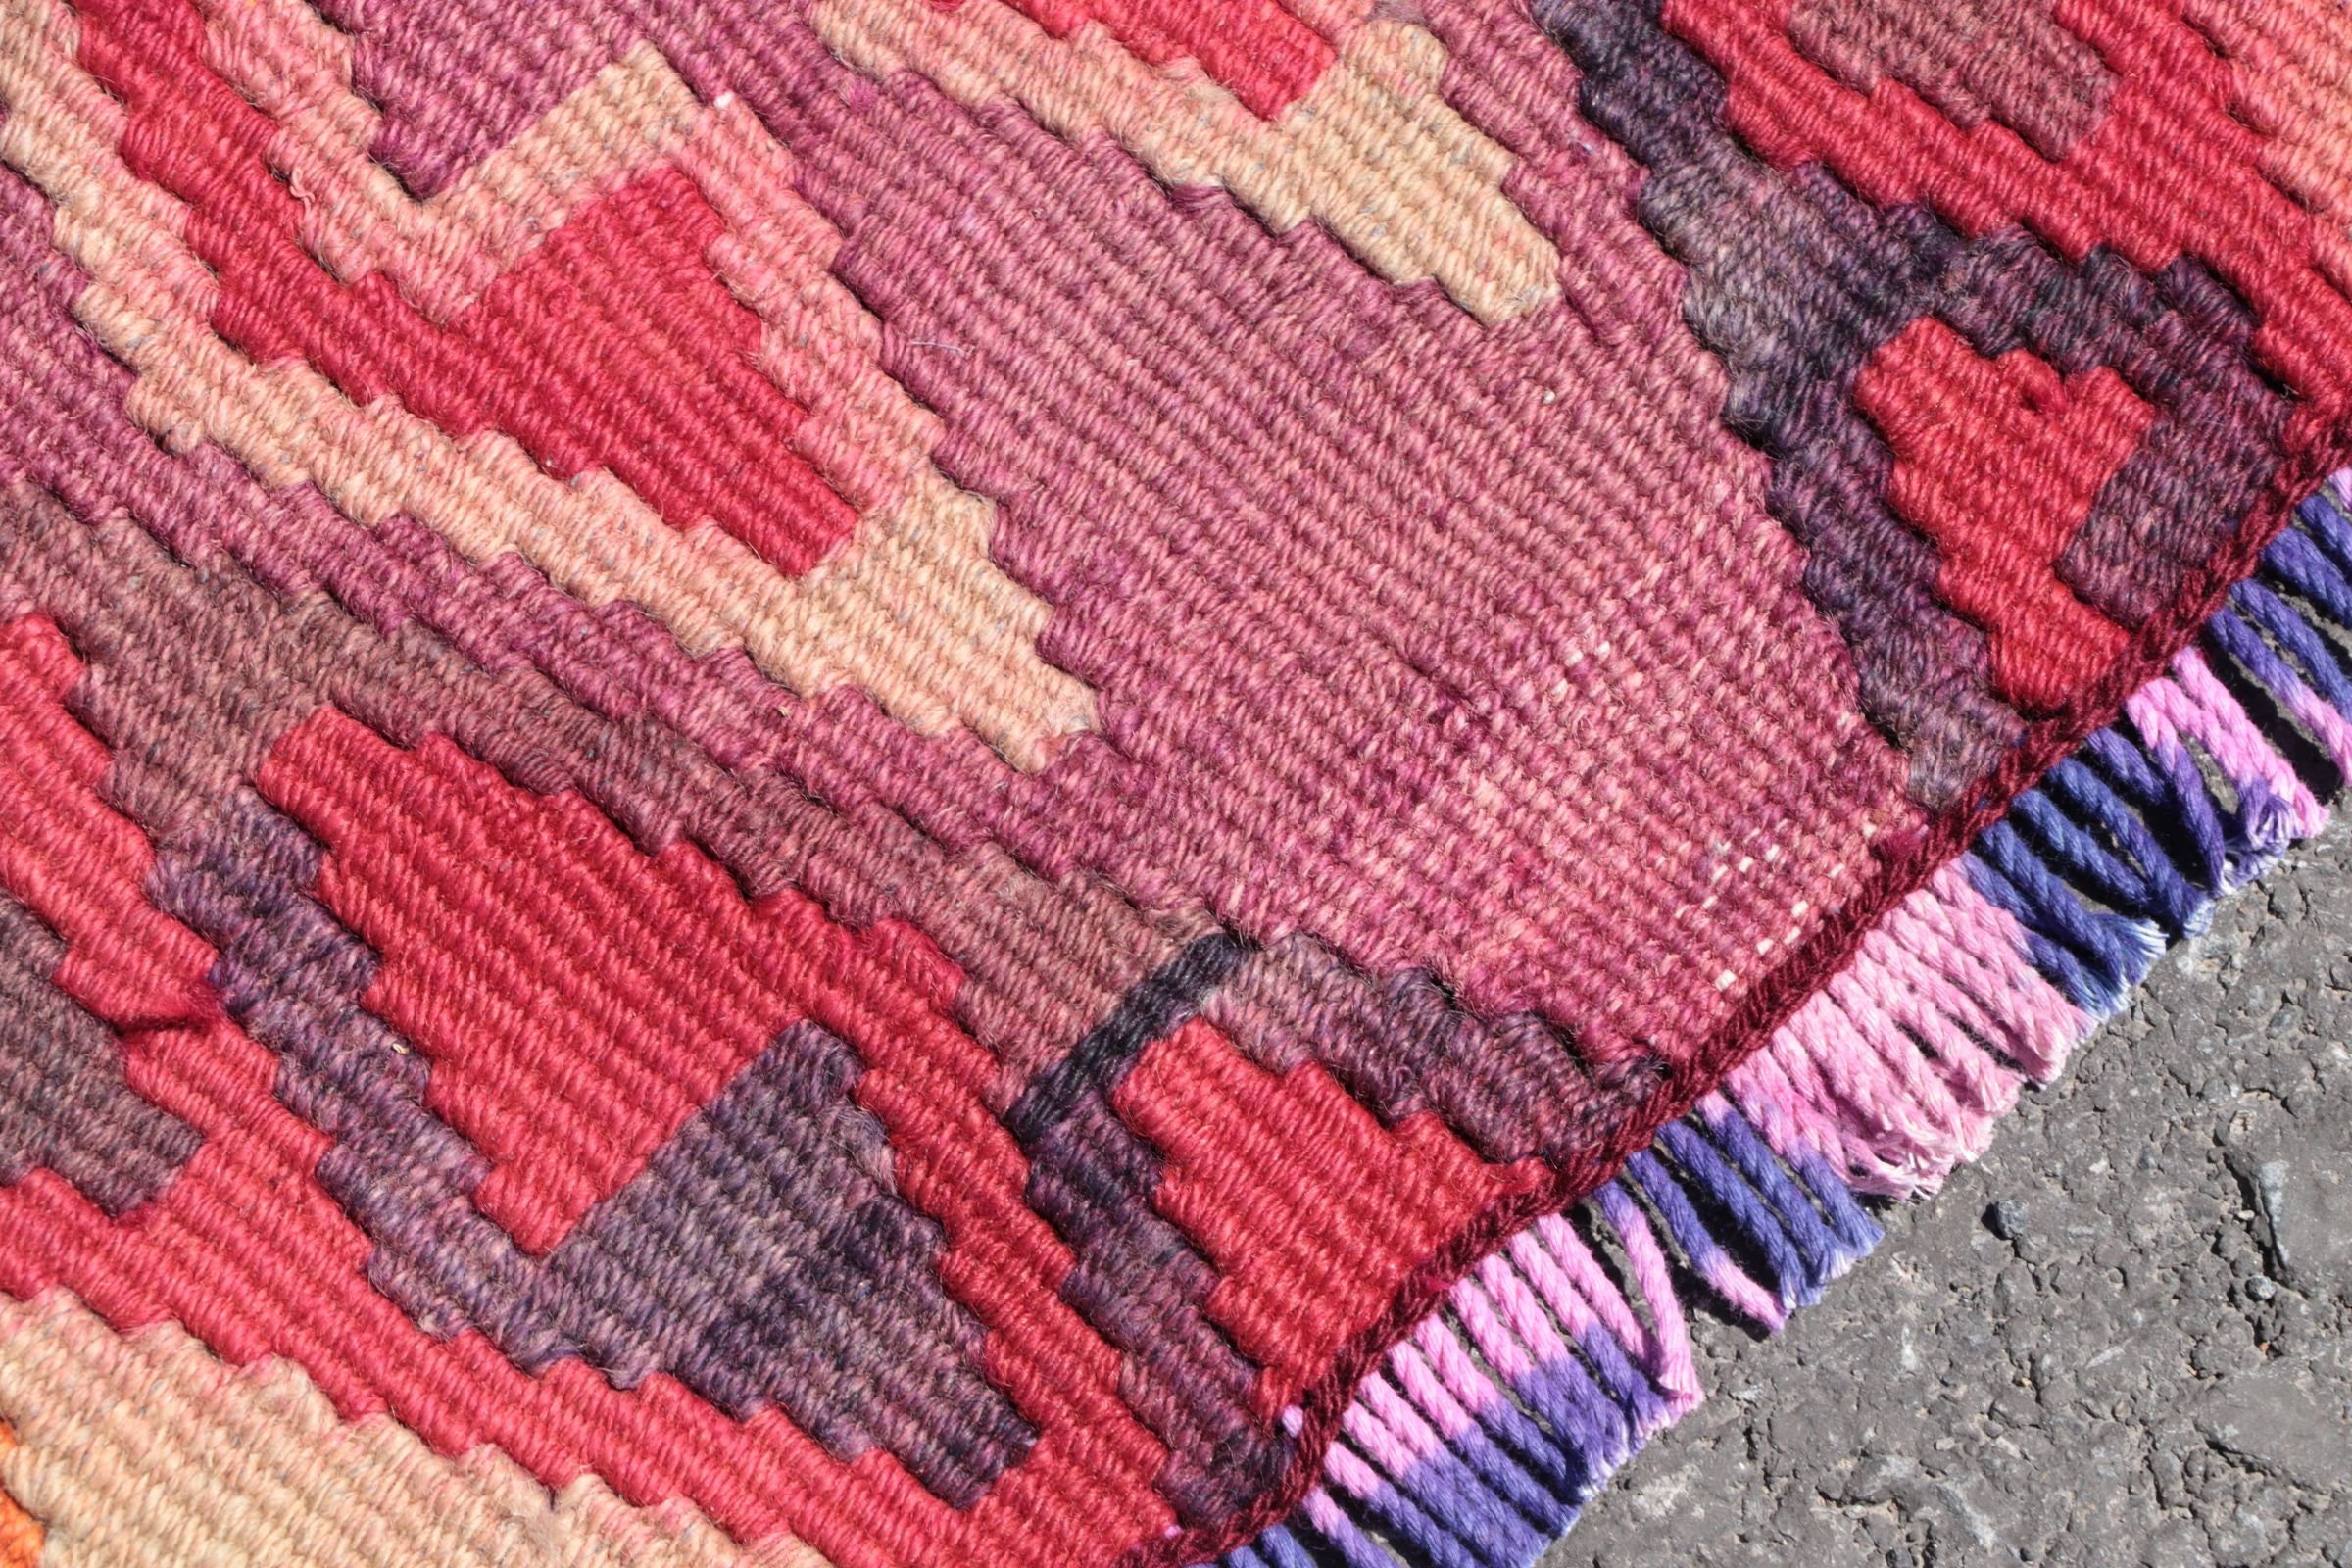 Rugs for Corridor, Kitchen Rugs, Turkish Rug, Pink Antique Rugs, Vintage Rugs, Corridor Rug, 3x11.5 ft Runner Rug, Antique Rug, Floor Rug